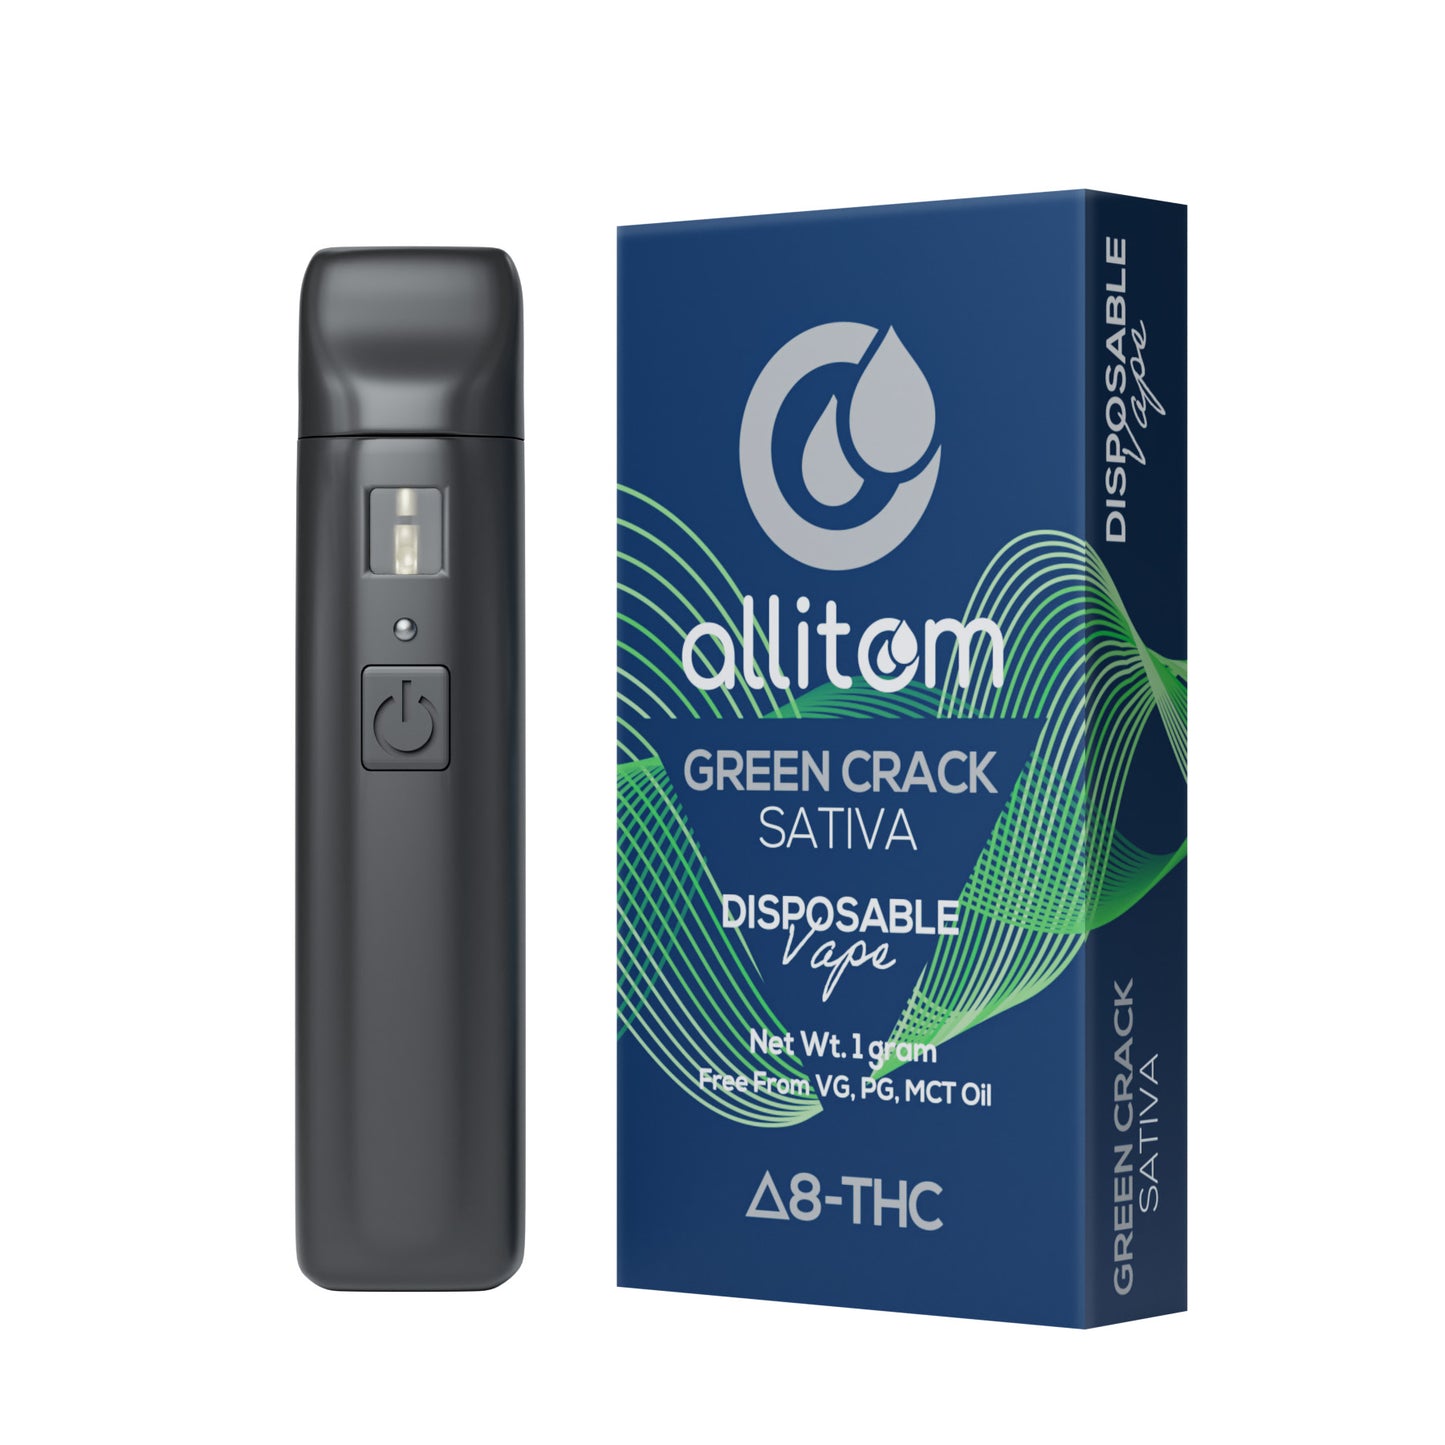 Allitom - Delta 8 1g Disposable - 5ct Display